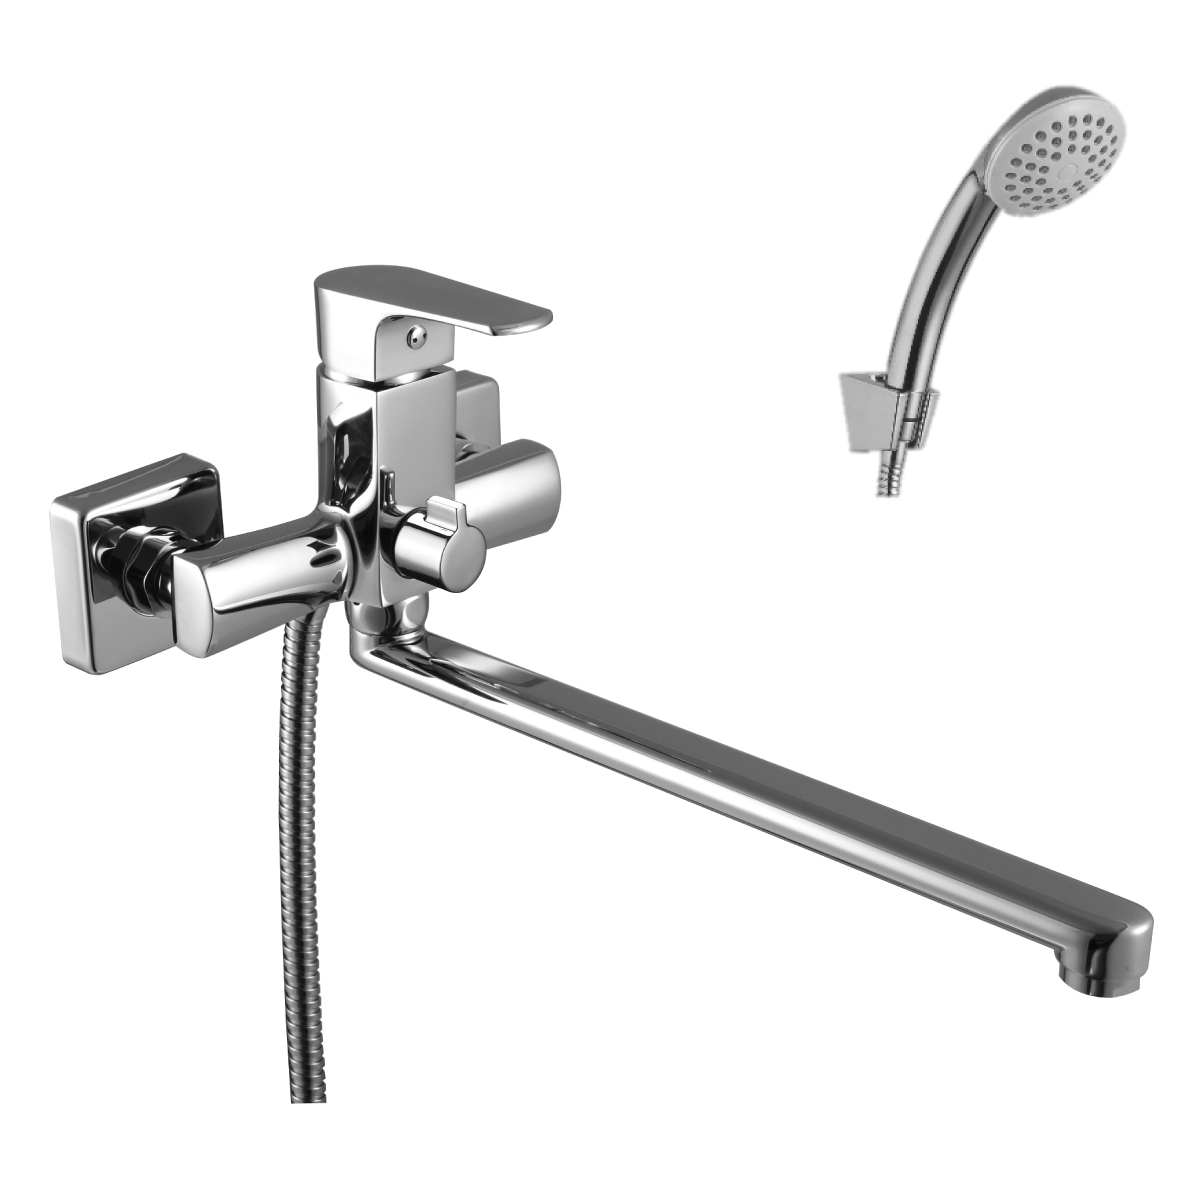 LM1651C Washbasin/bath faucet
with 300 mm flat swivel spout